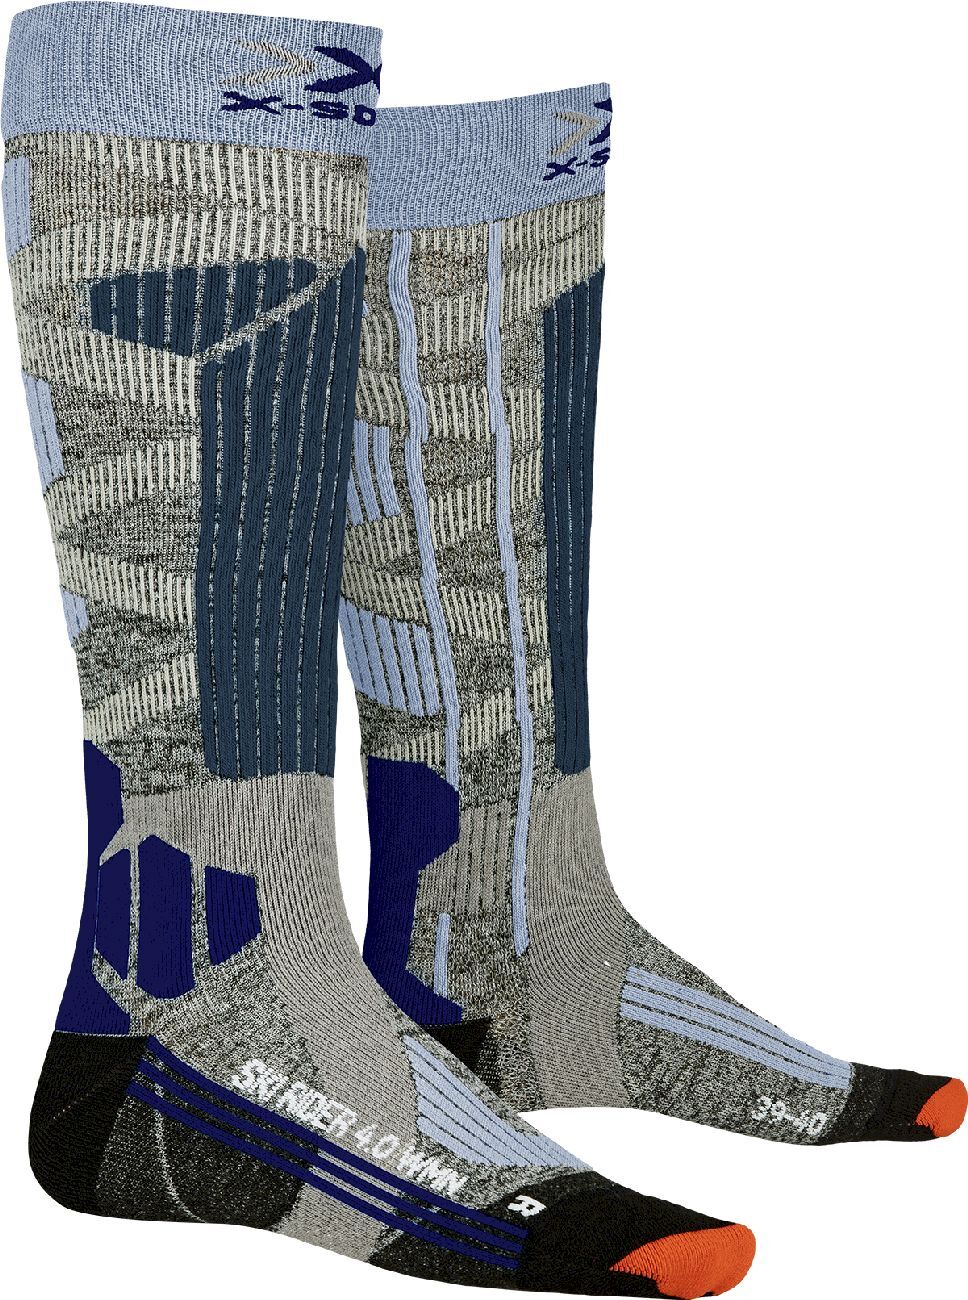 X-Socks Ski Rider 4.0 - Ski socks - Women's